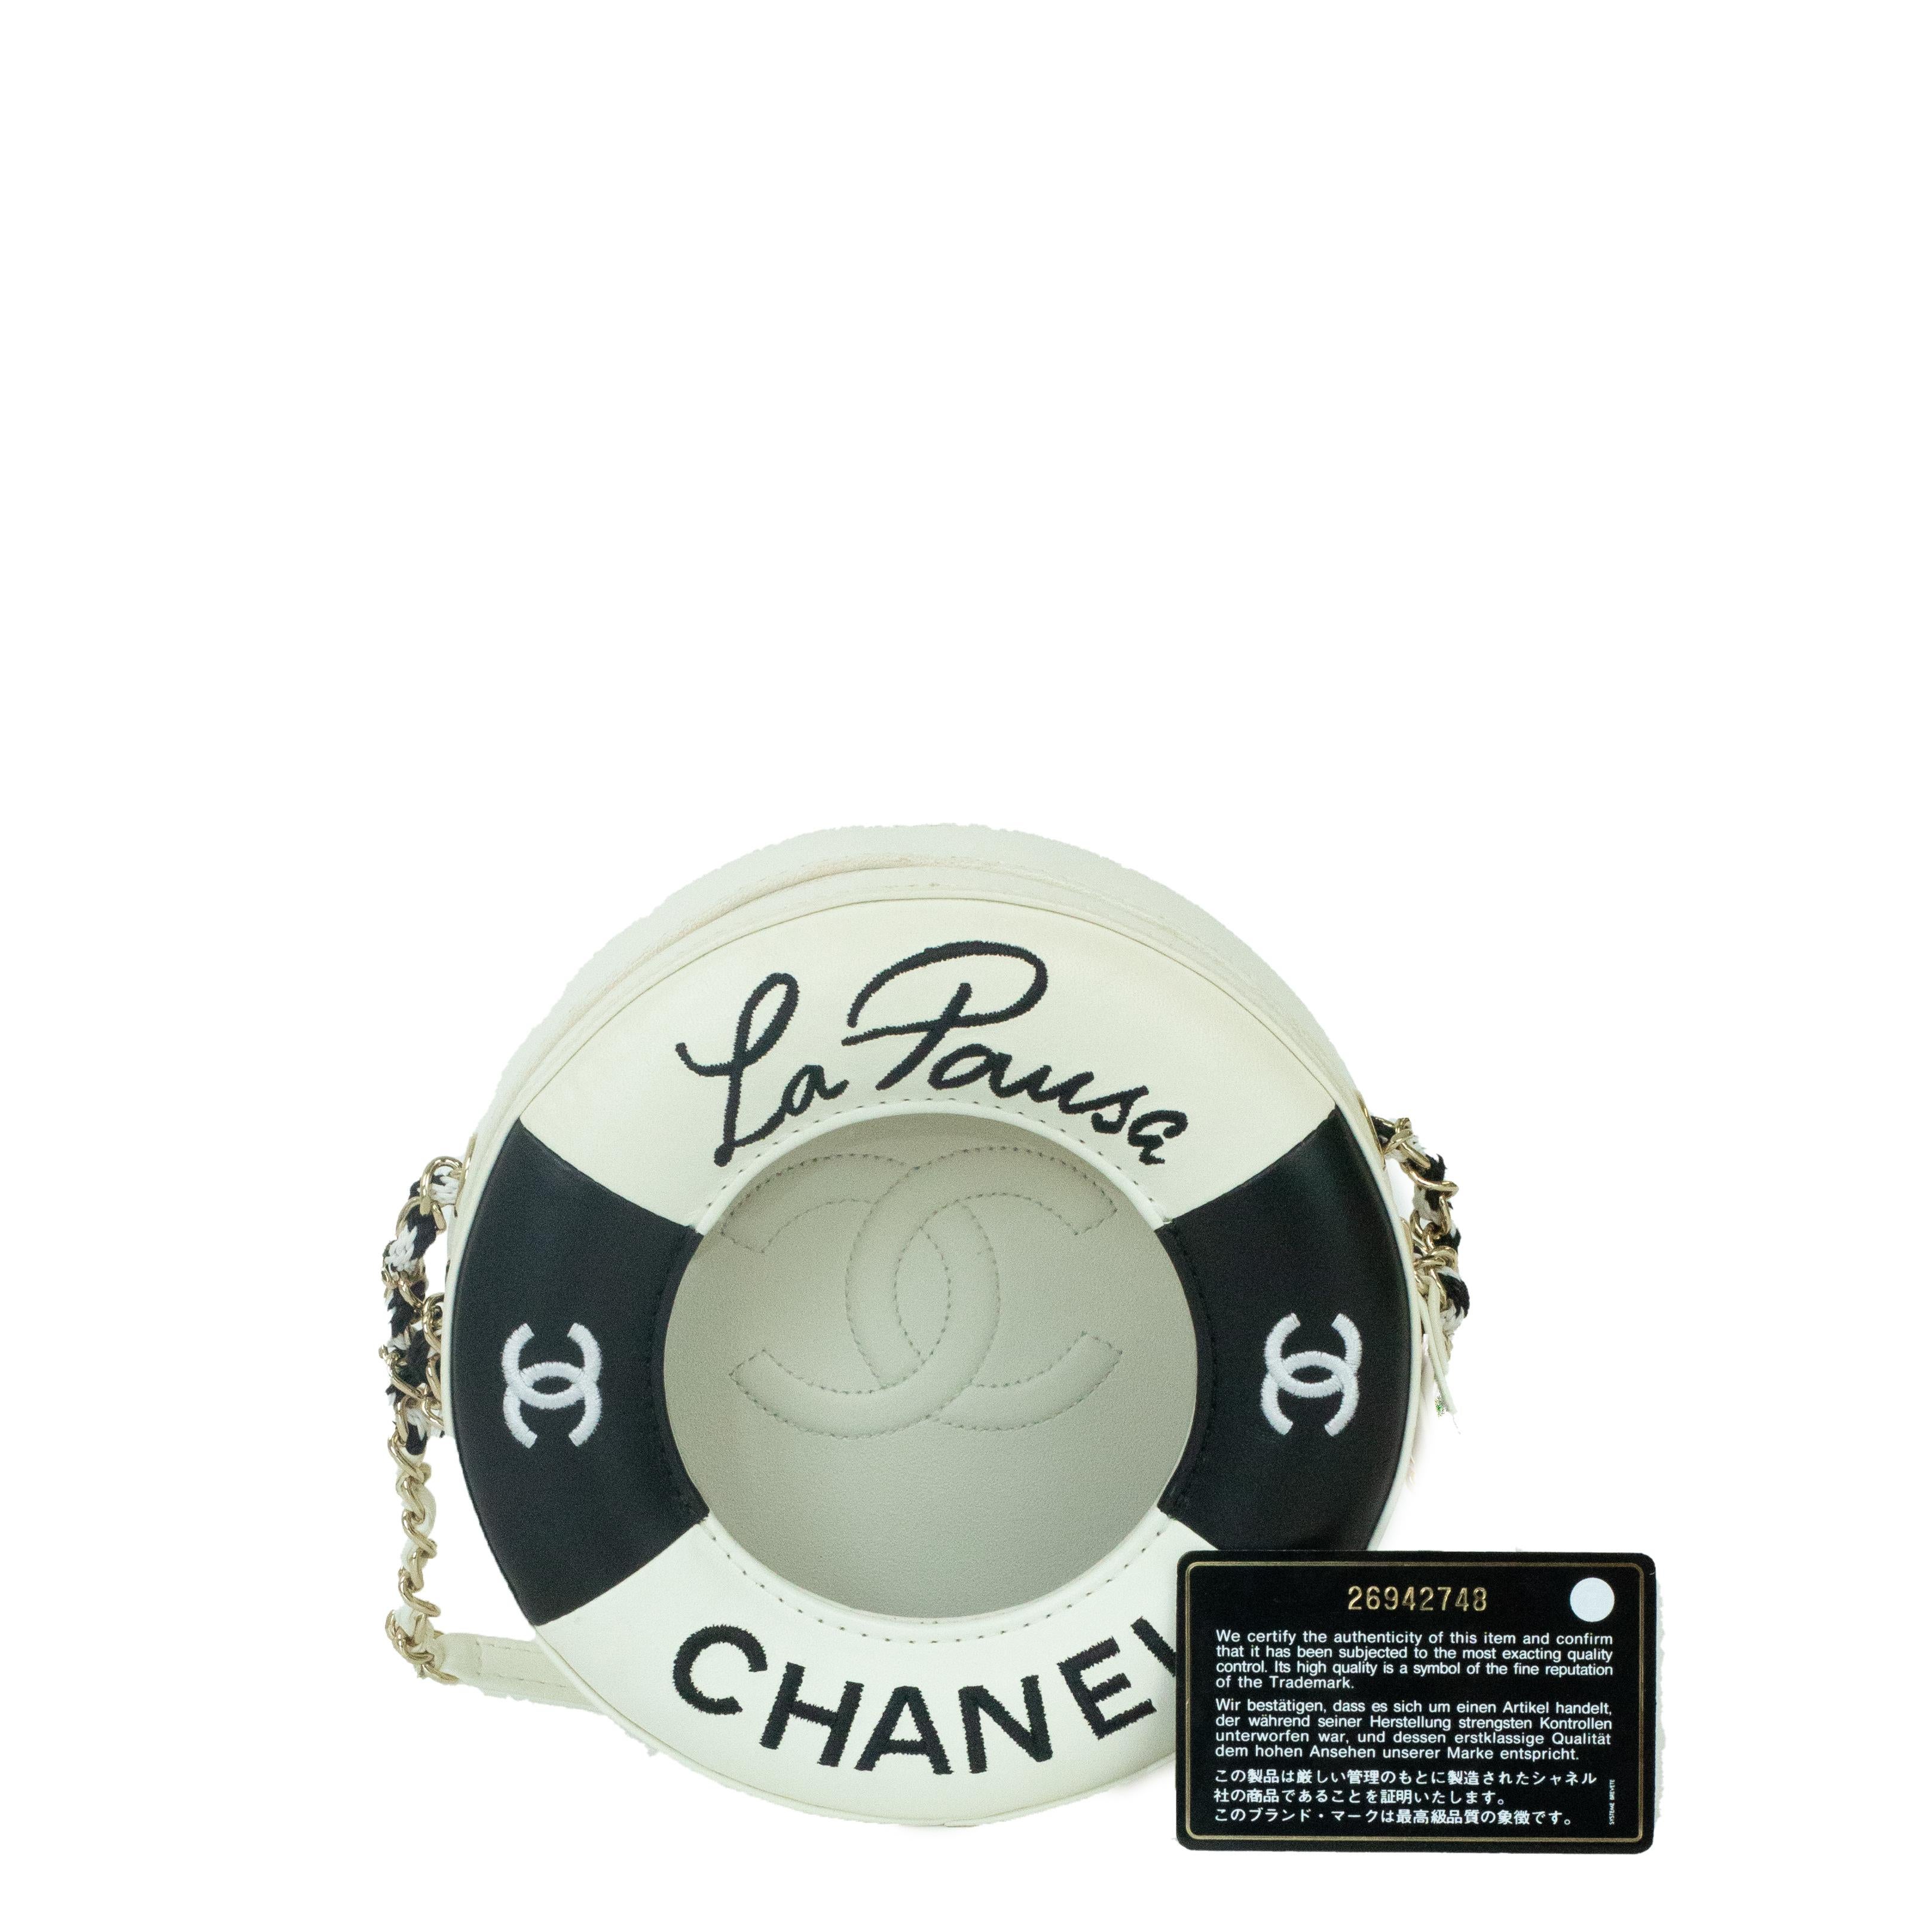 Chanel, La pausa in white leather 7